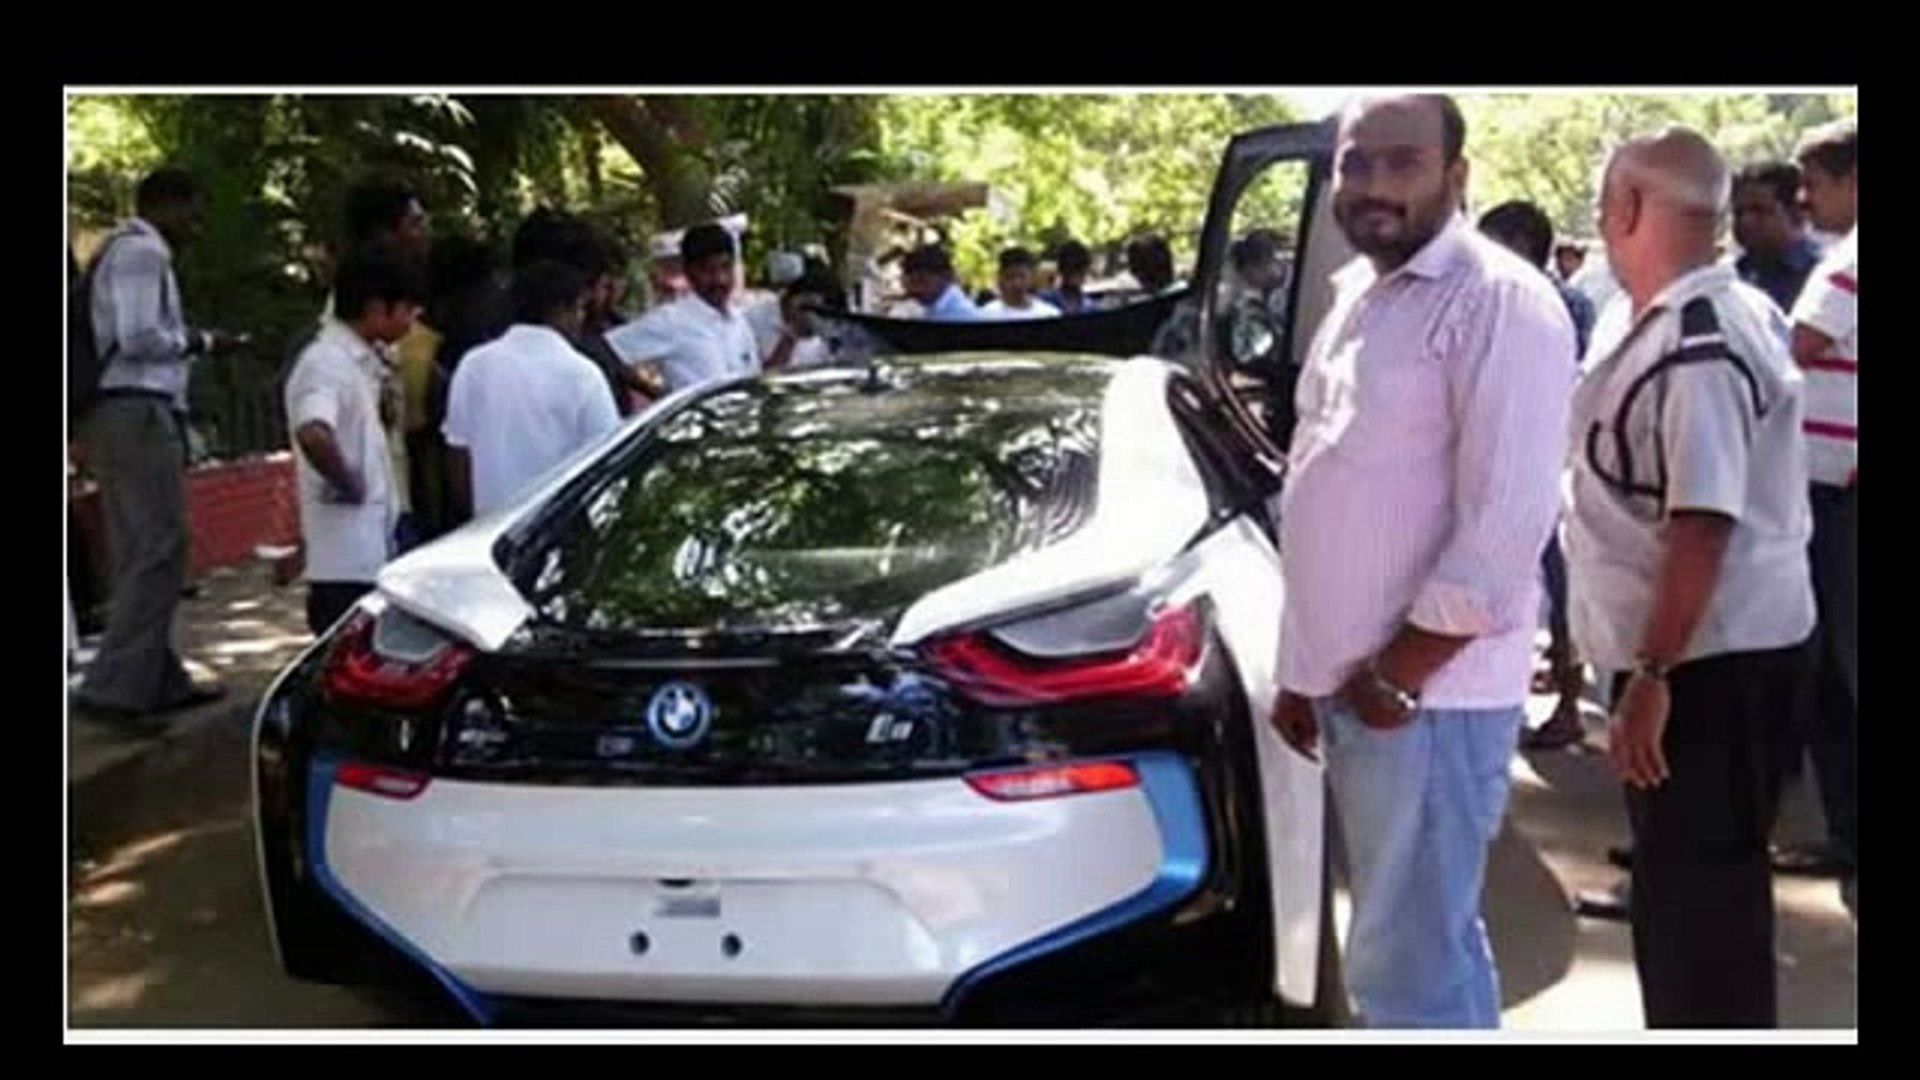 Thala Ajith New Bmw I8 Car Video Dailymotion Ajith kumar added a new photo to the album: thala ajith new bmw i8 car